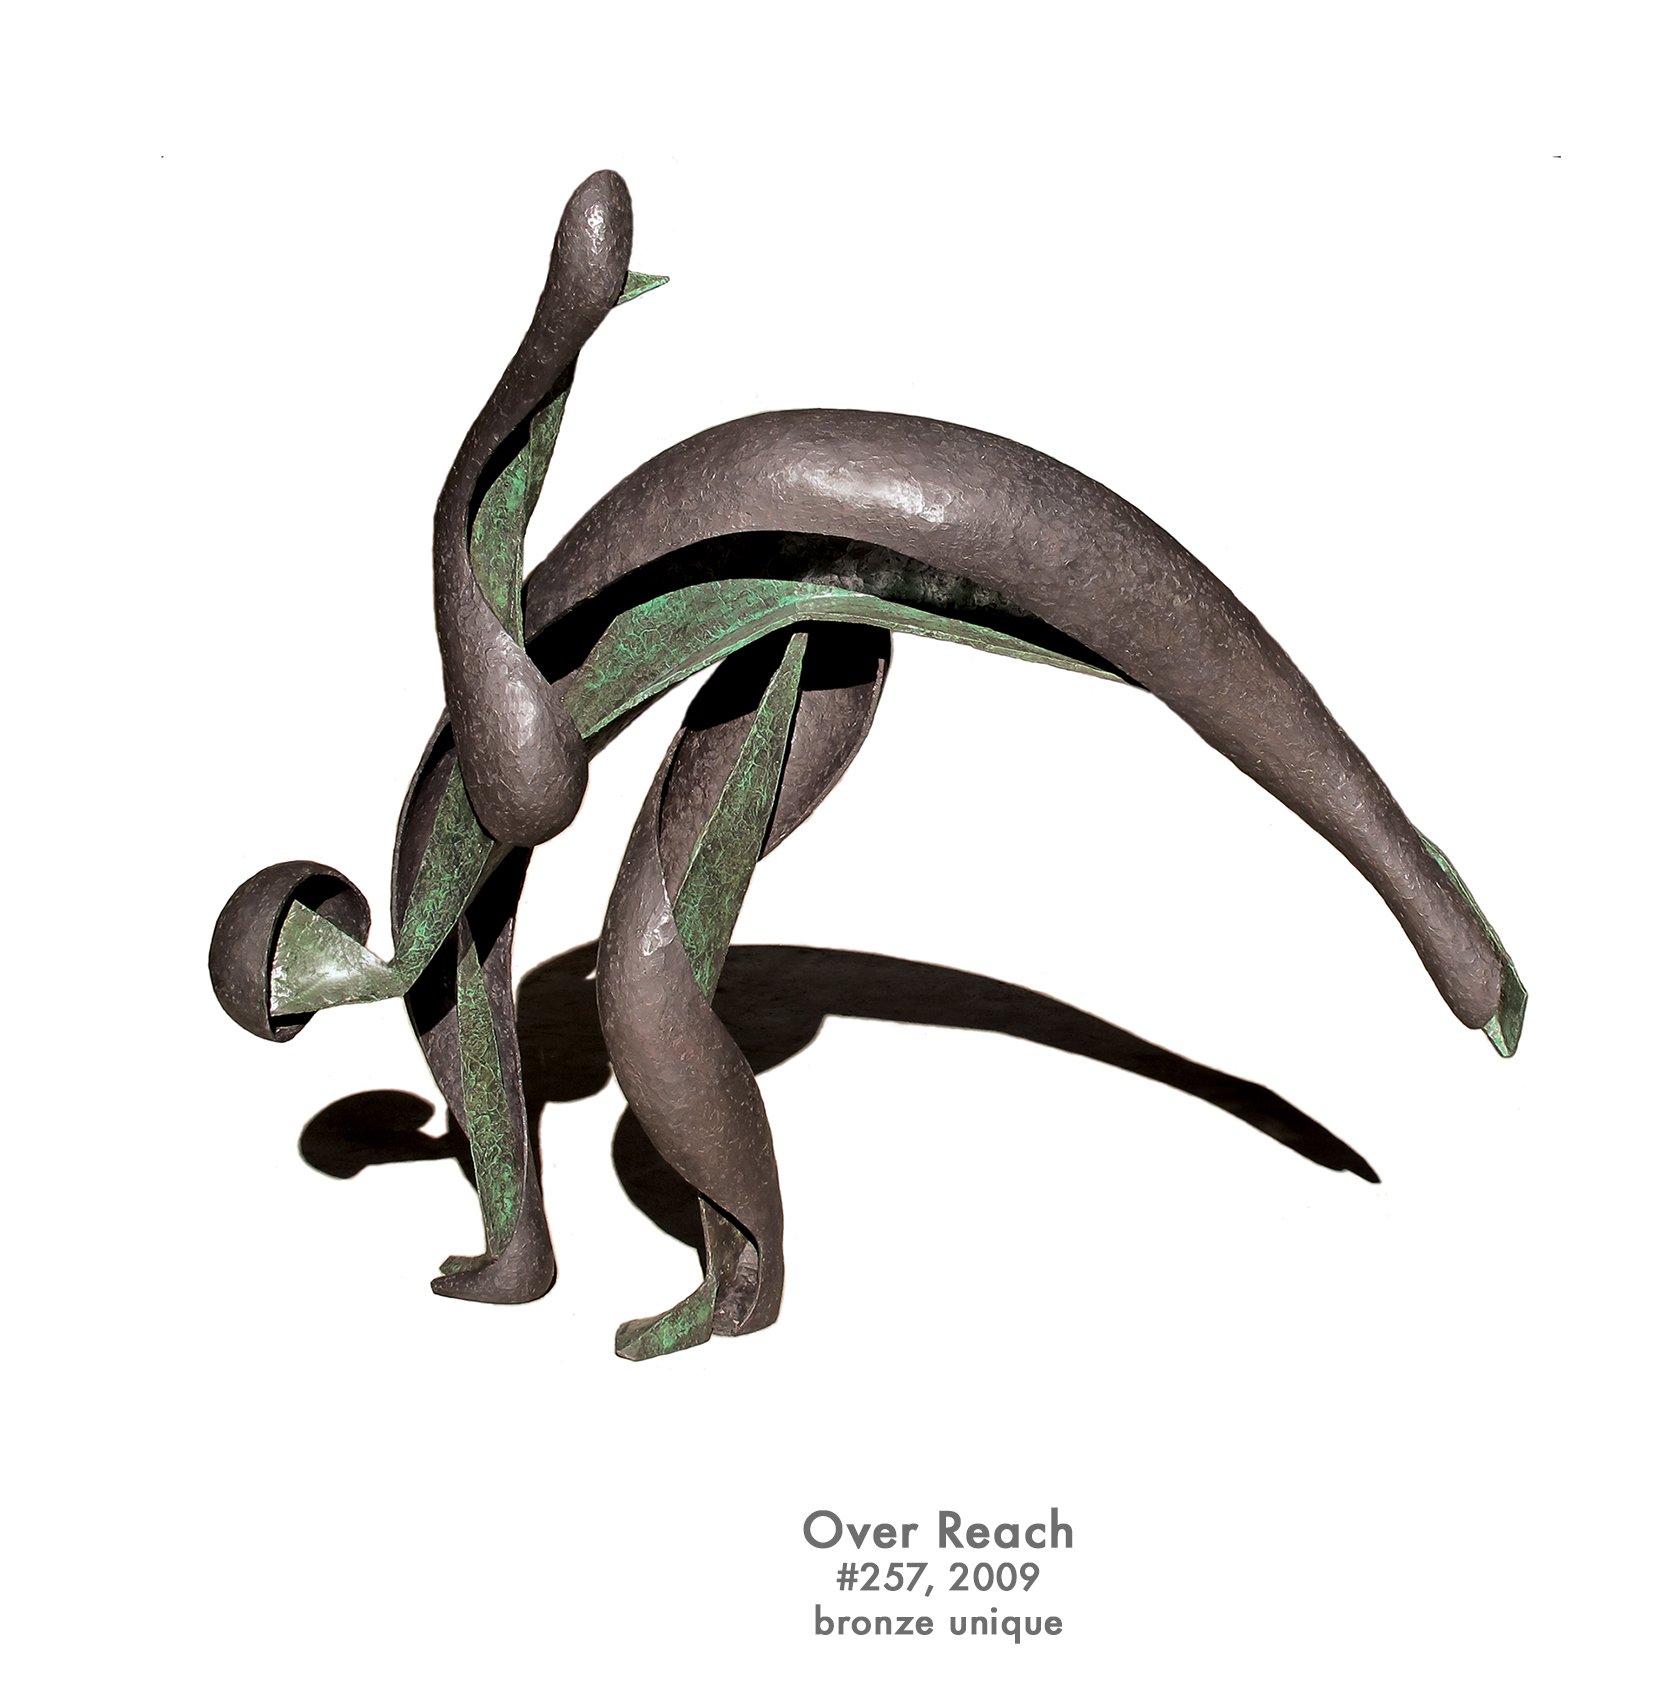 Over Reach, 2009, bronze, #257